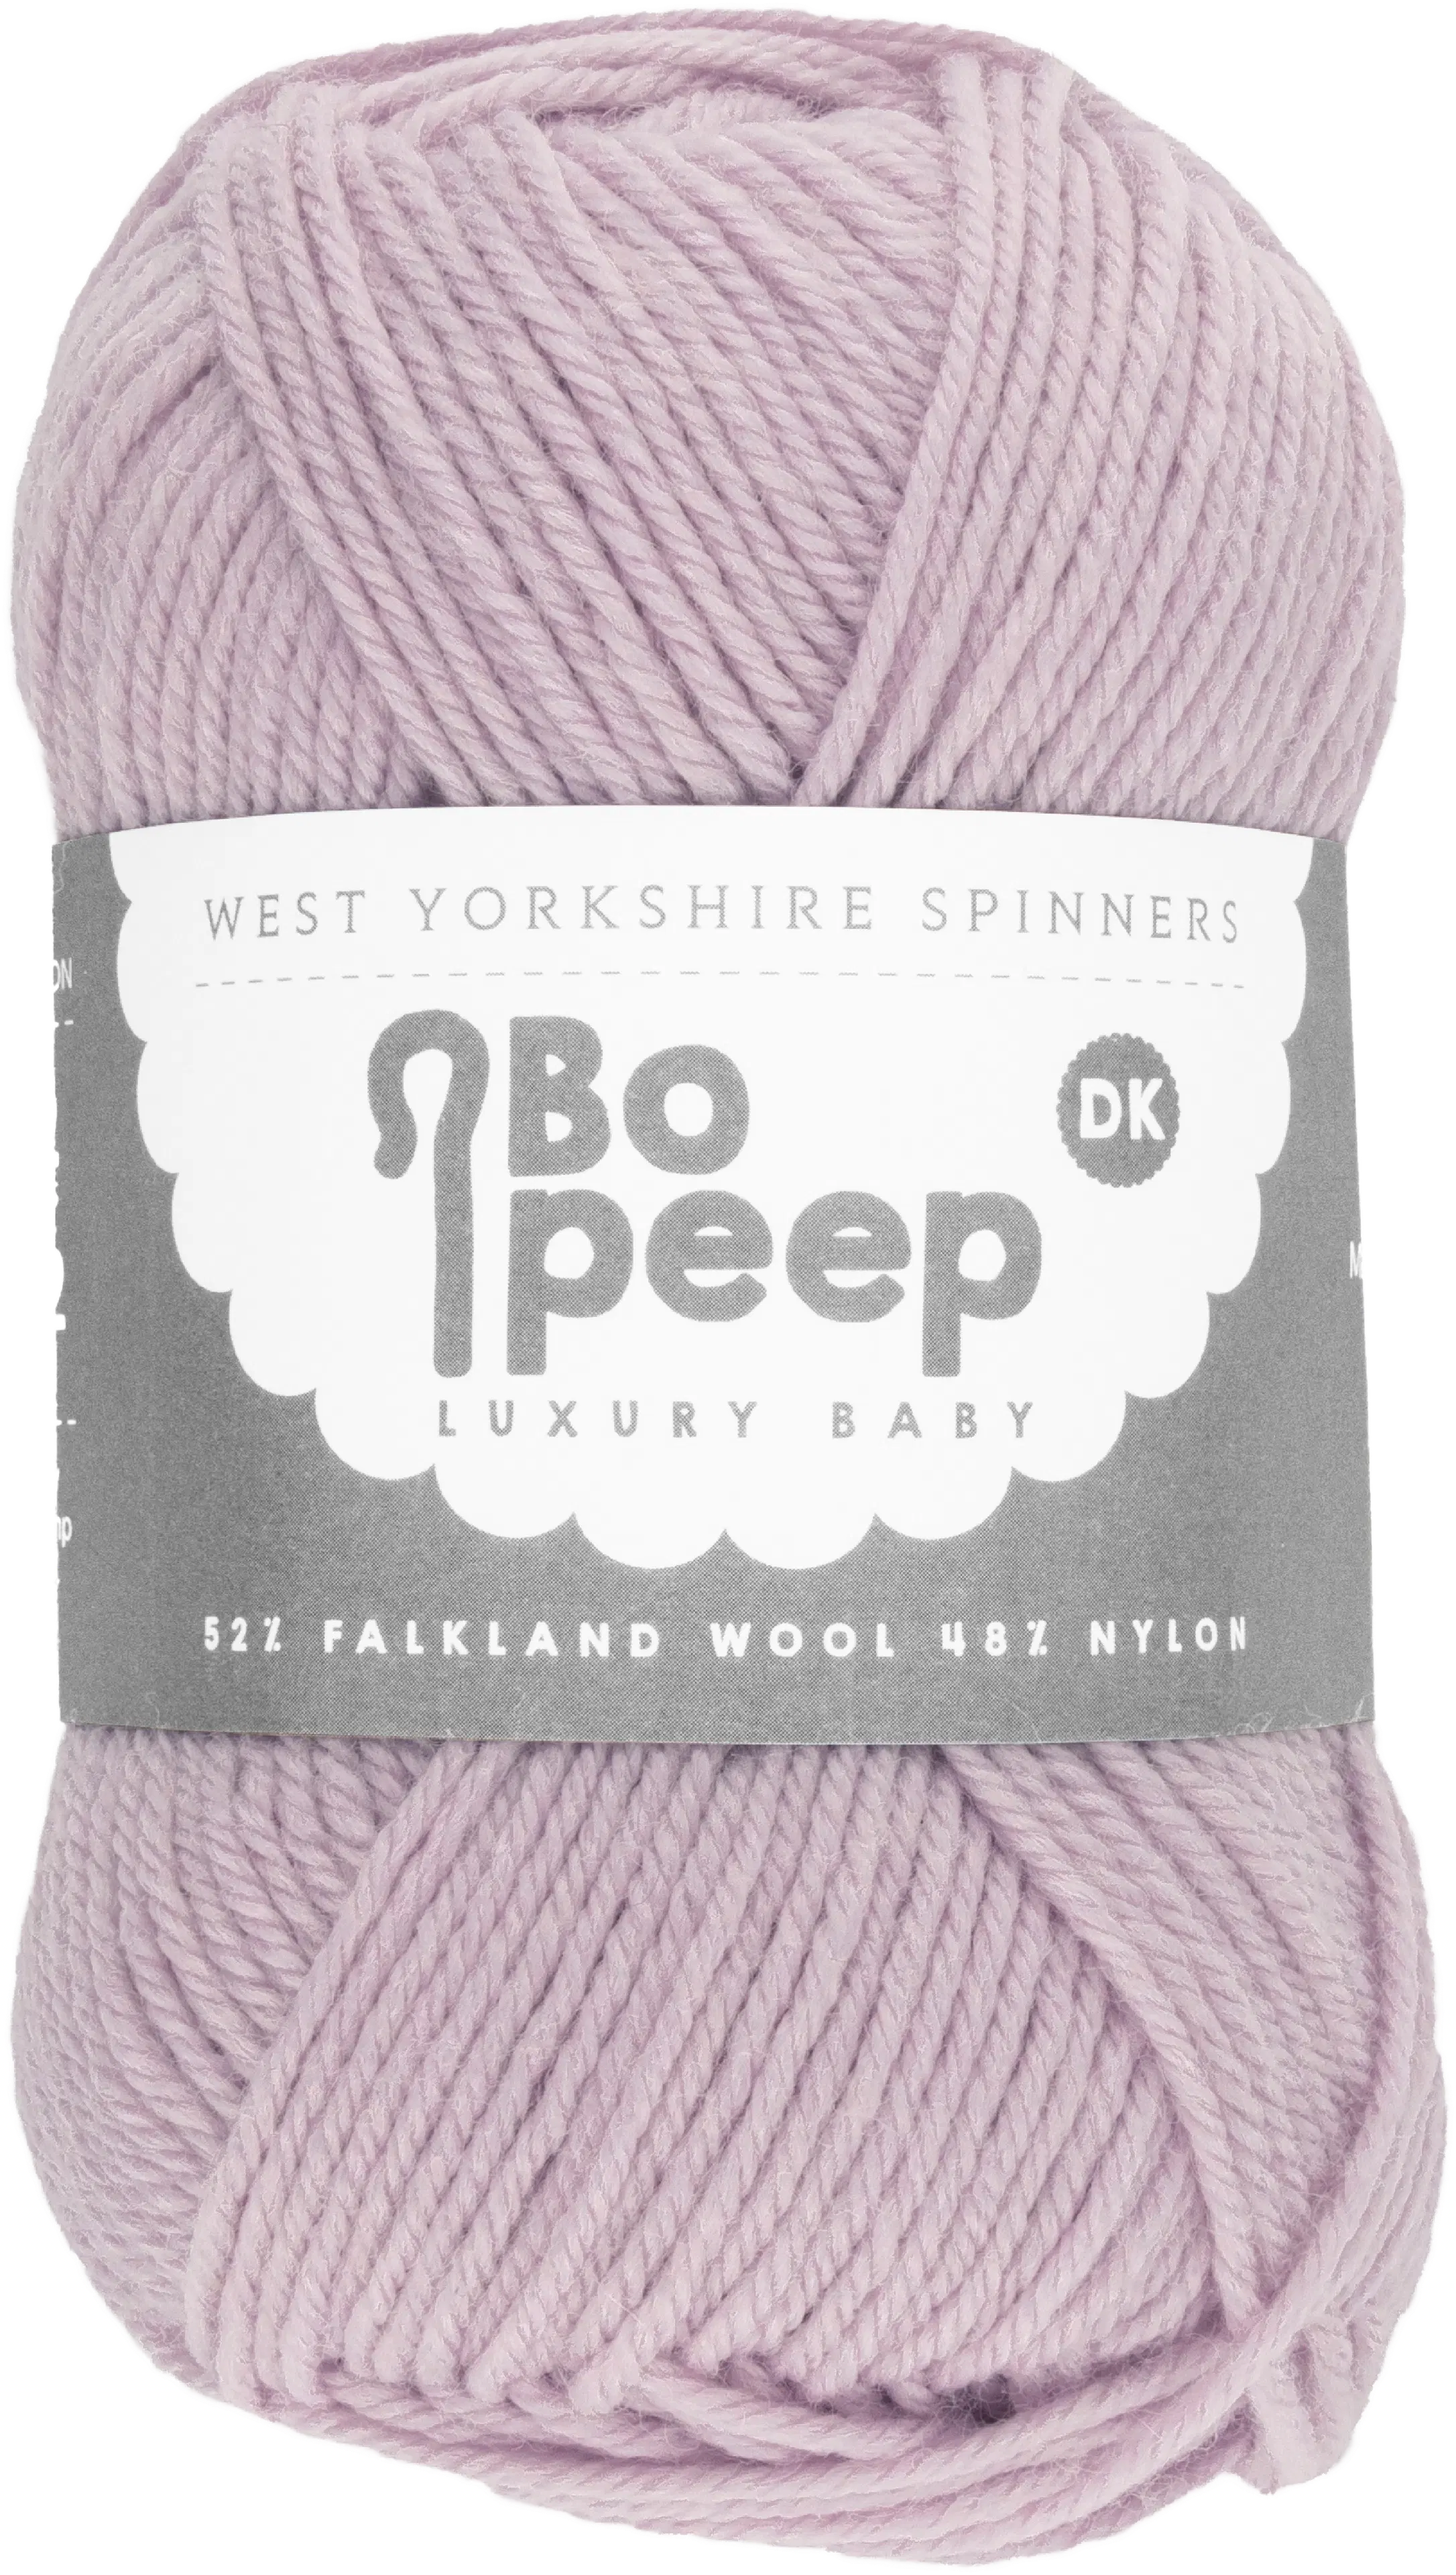 West Yorkshire Spinners lanka Bo Peep Luxury Baby DK 50g kipinä 728